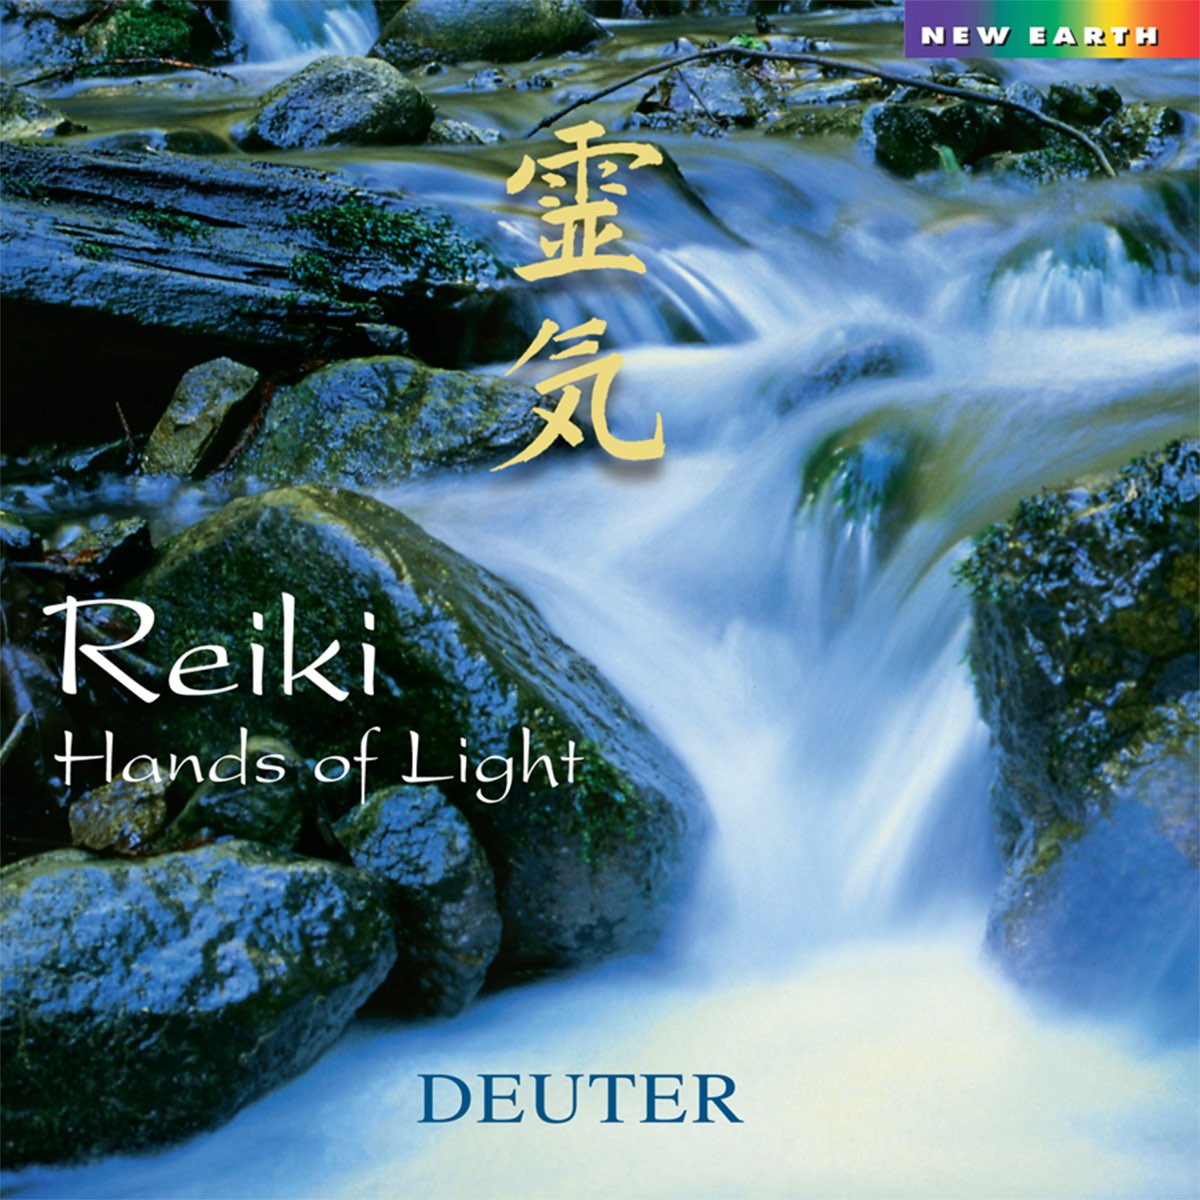 udluftning plade dato Reiki Hands of Light by Deuter on Apple Music